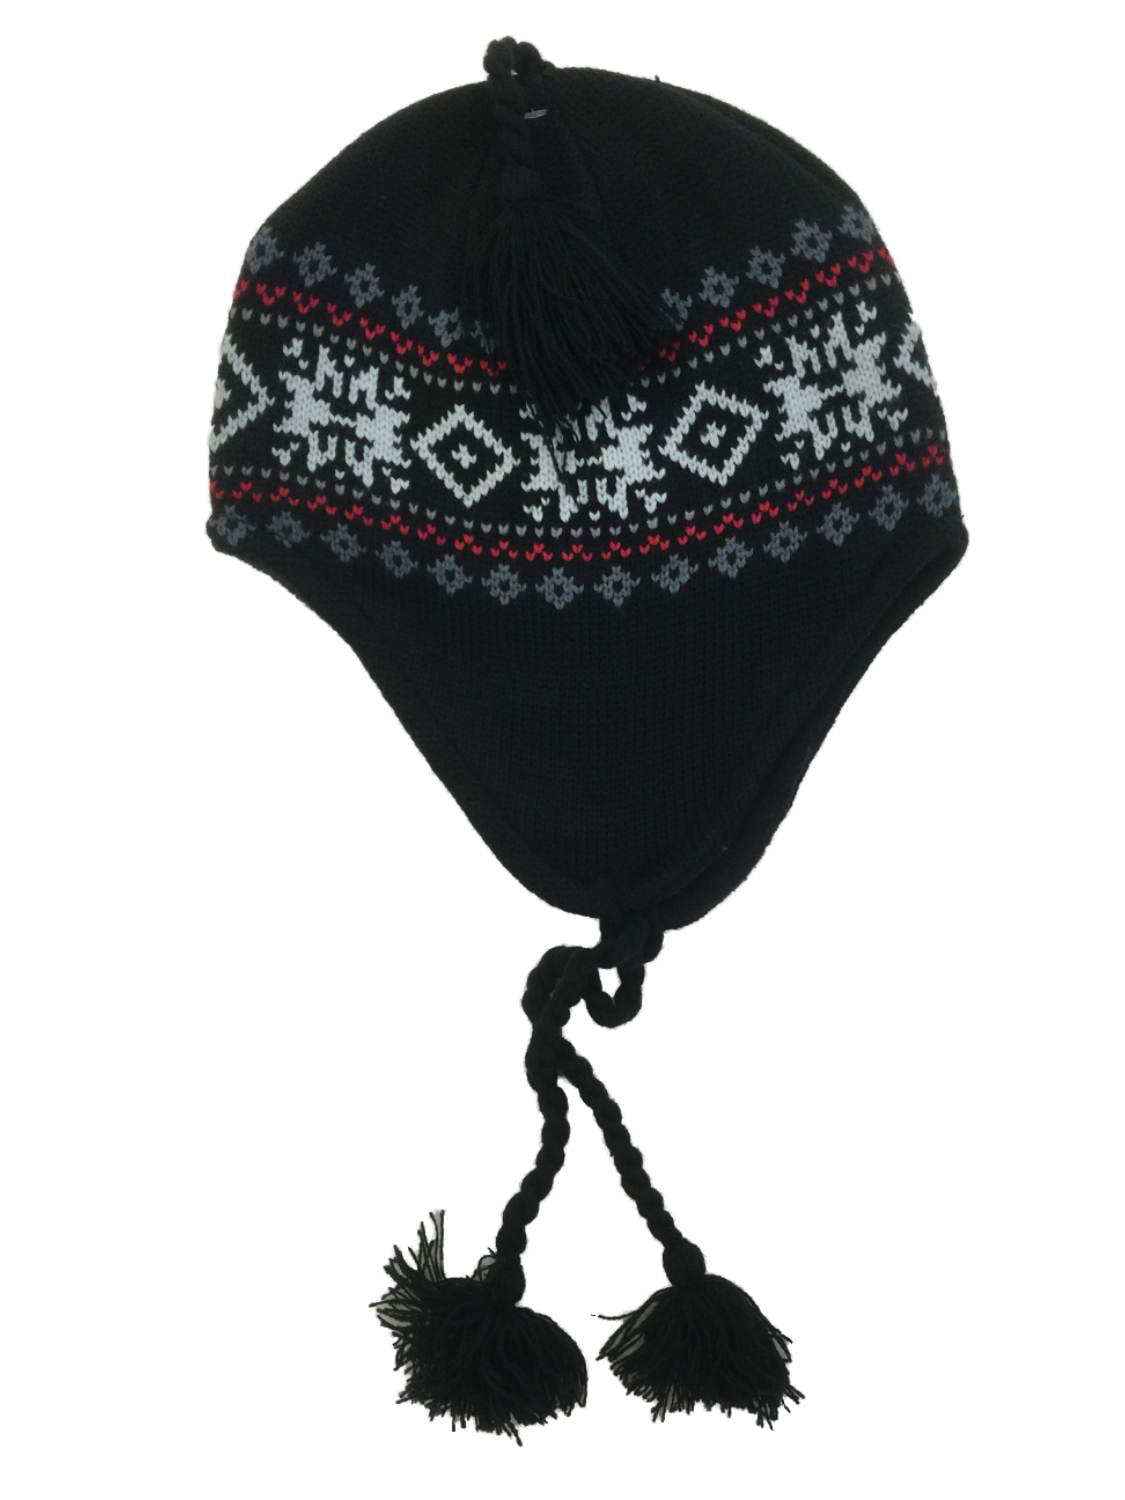 Helmet Knit 5 Hat Choices Children Boy Girl Fleece Lined Tassle Snowflakes "SALE 